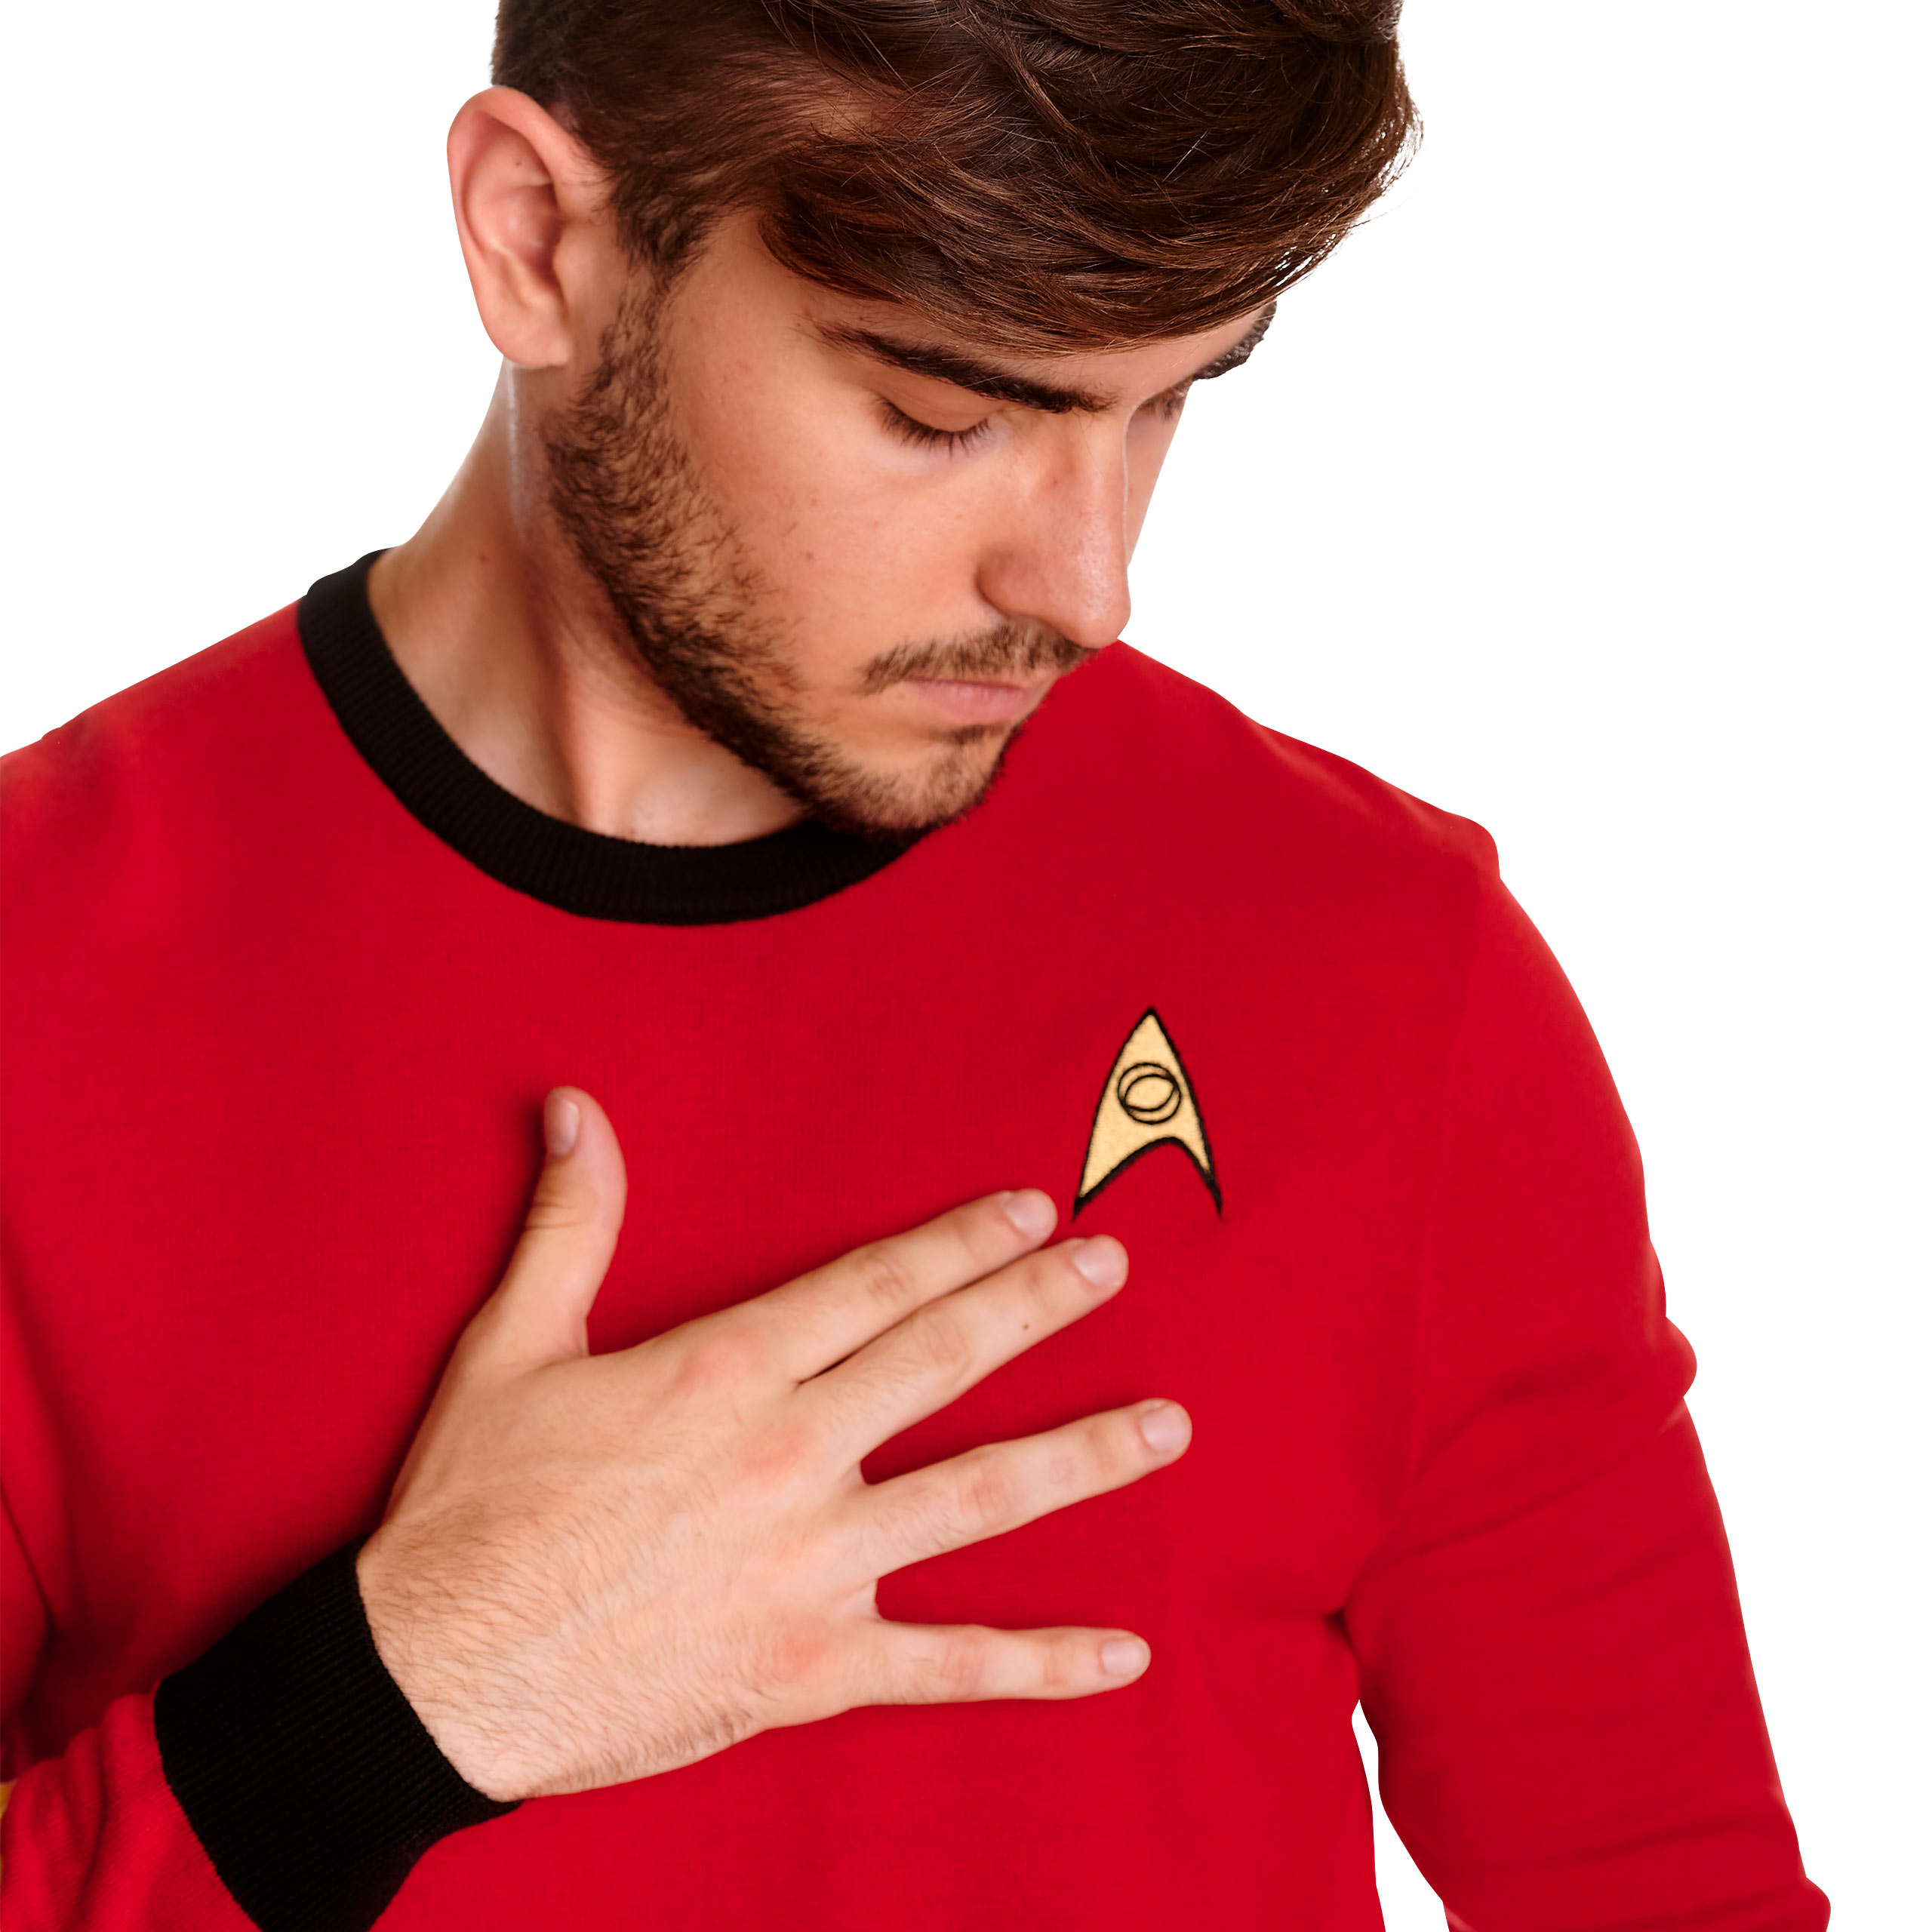 Star Trek - Scotty Uniform Gebreide Trui rood